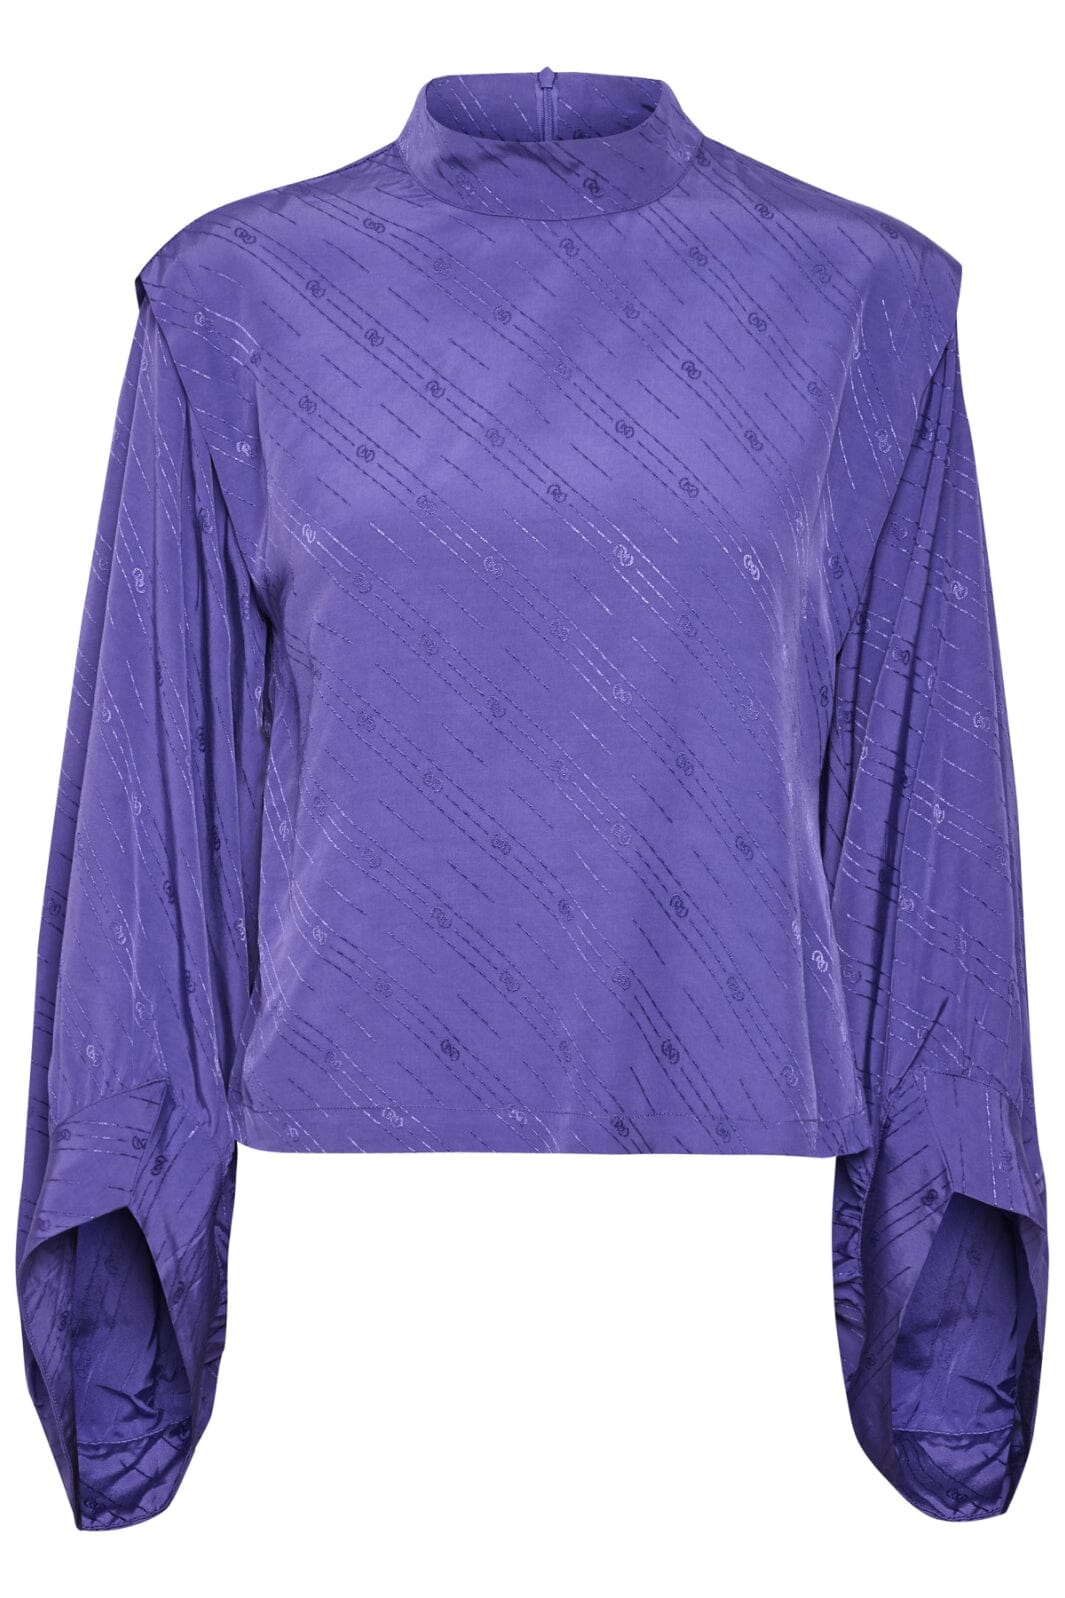 Gestuz - JacqlinGZ blouse - Purple Opulence Bluser 